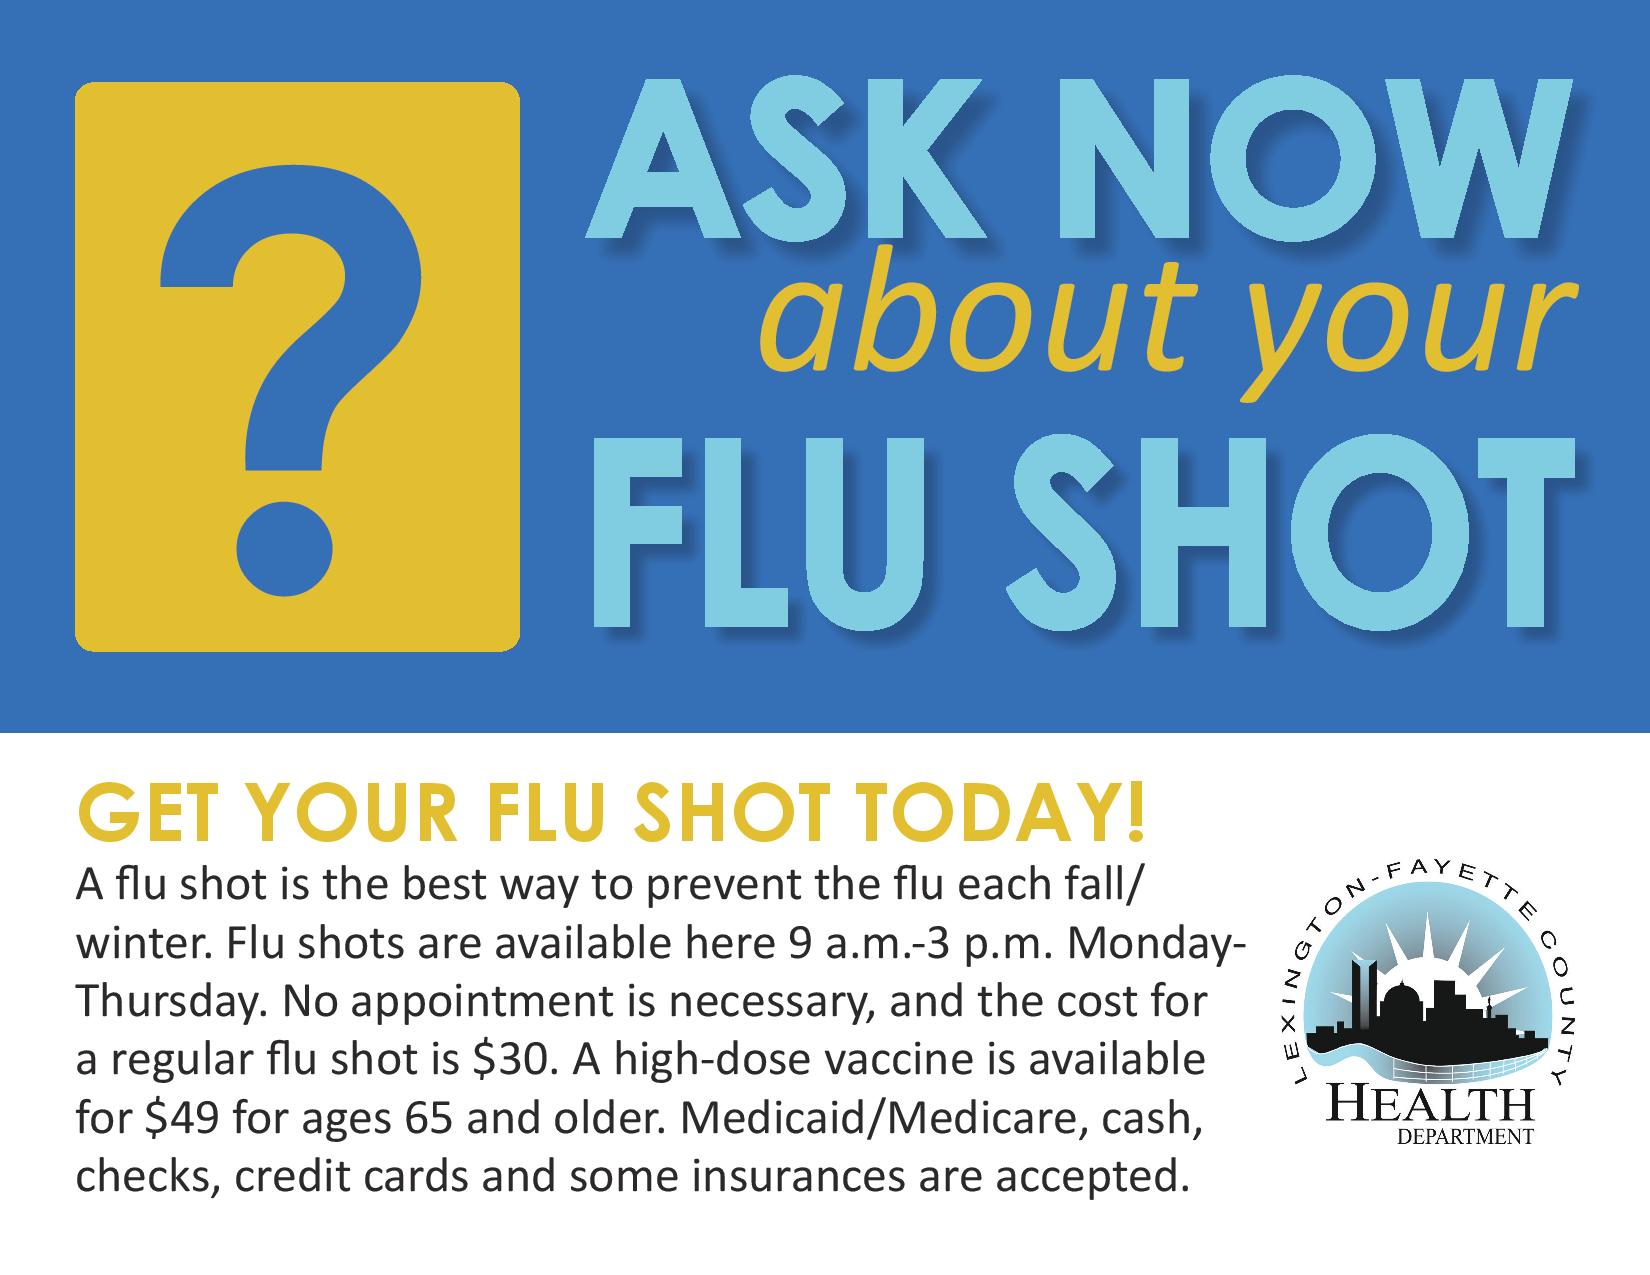 Flu season starts in Lexington: get your flu shot today!